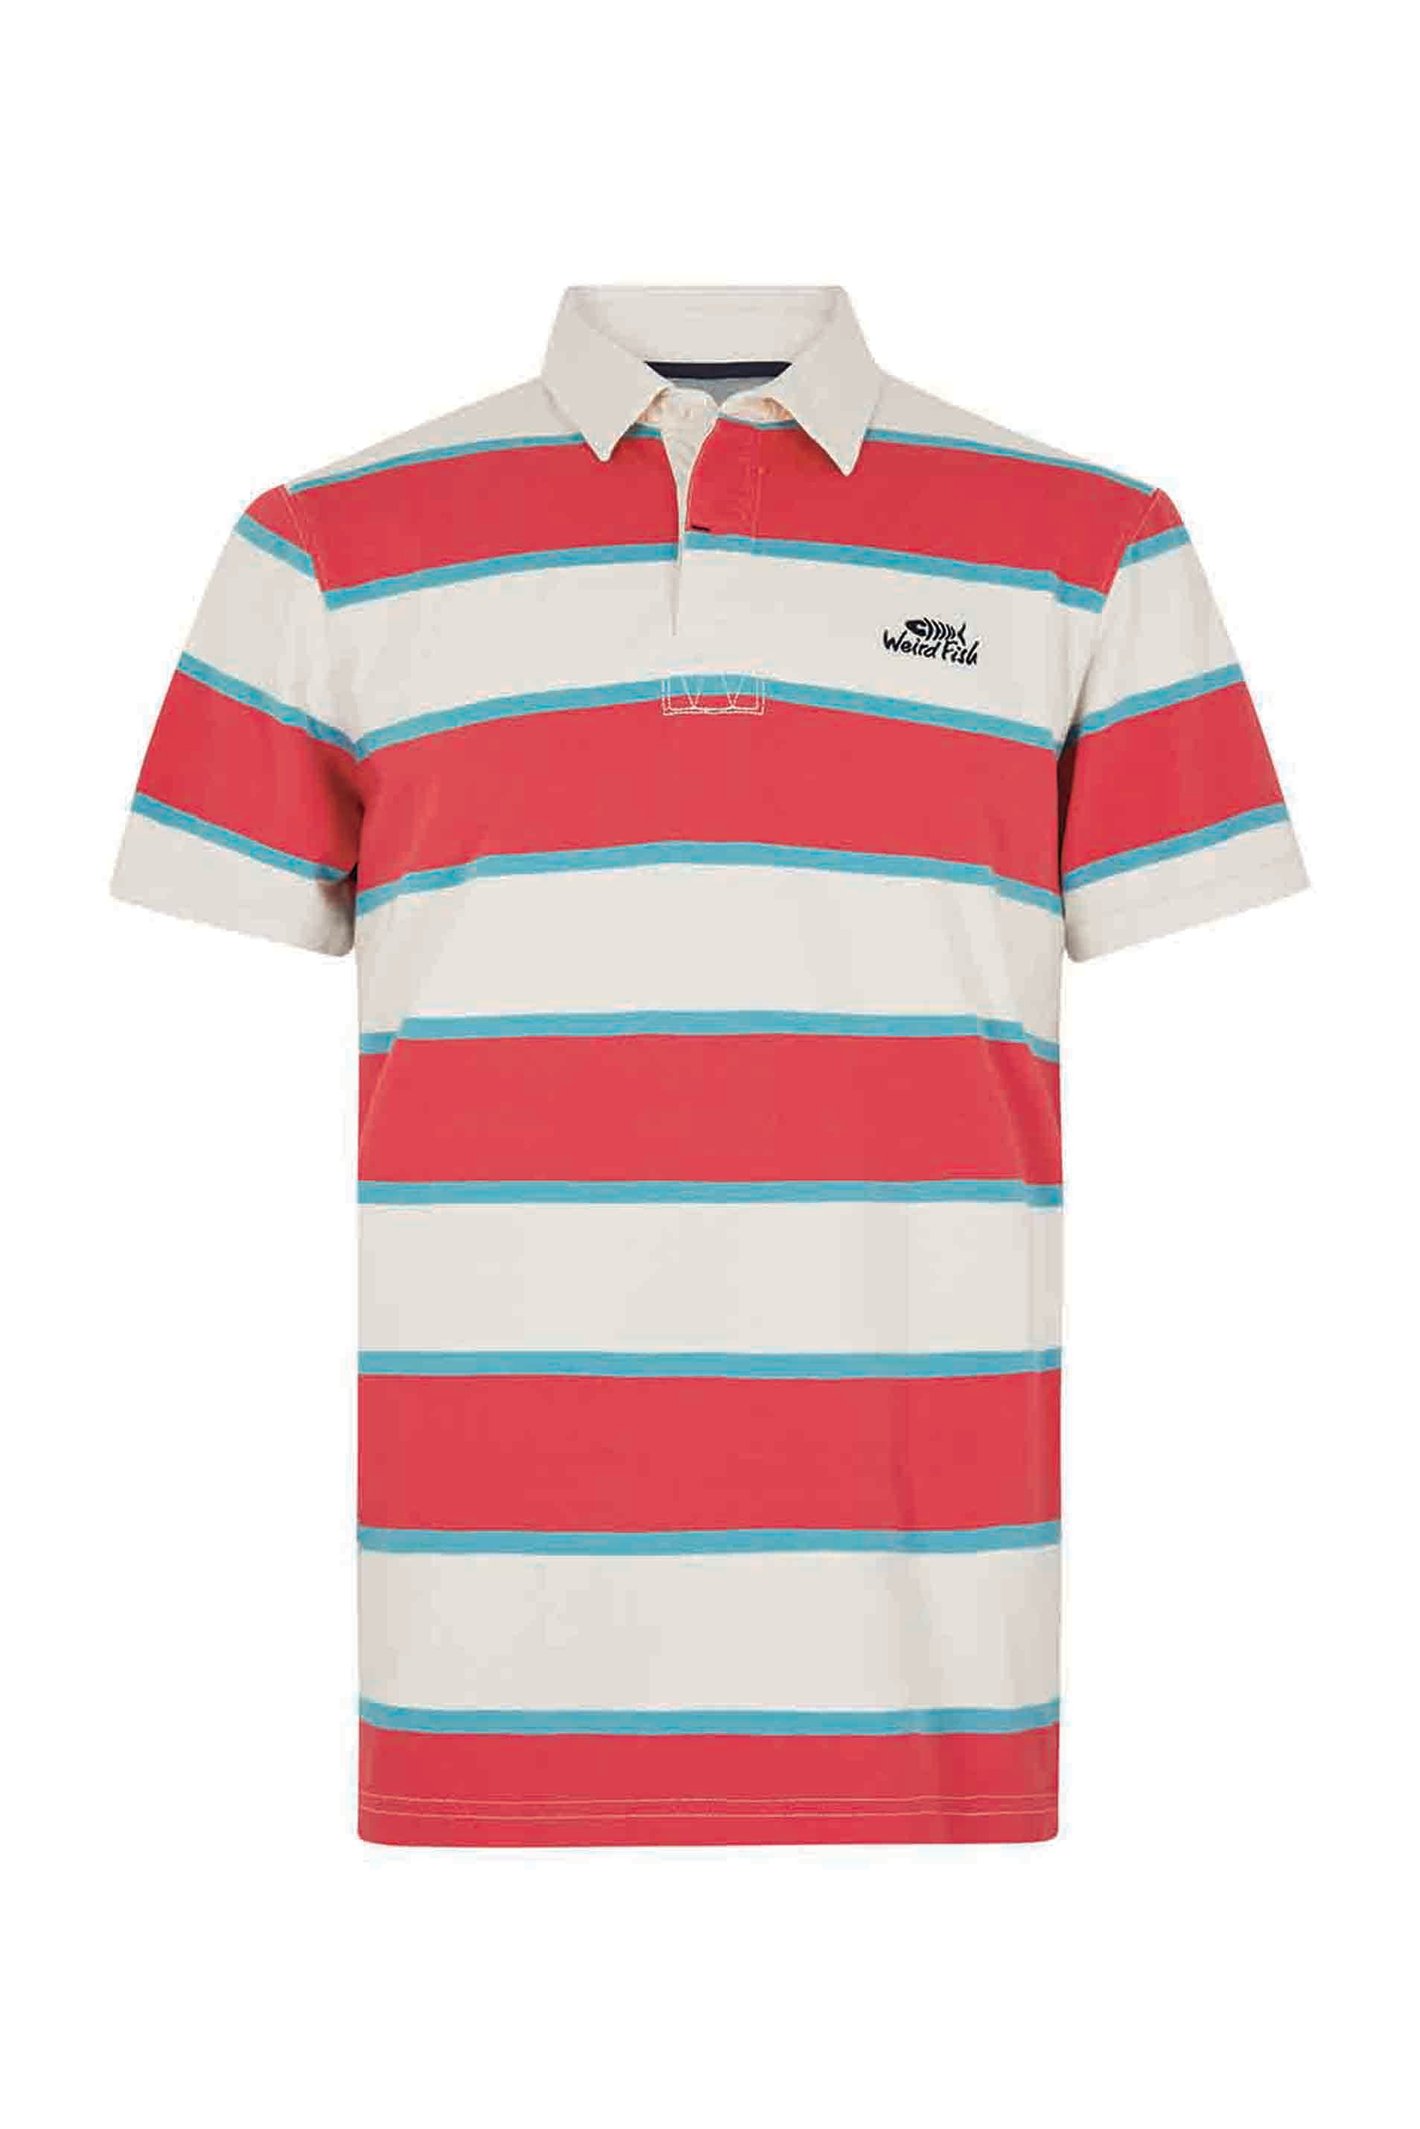 Weird Fish Rossett Organic Cotton Short Sleeve Rugby Shirt Radical Red Size M